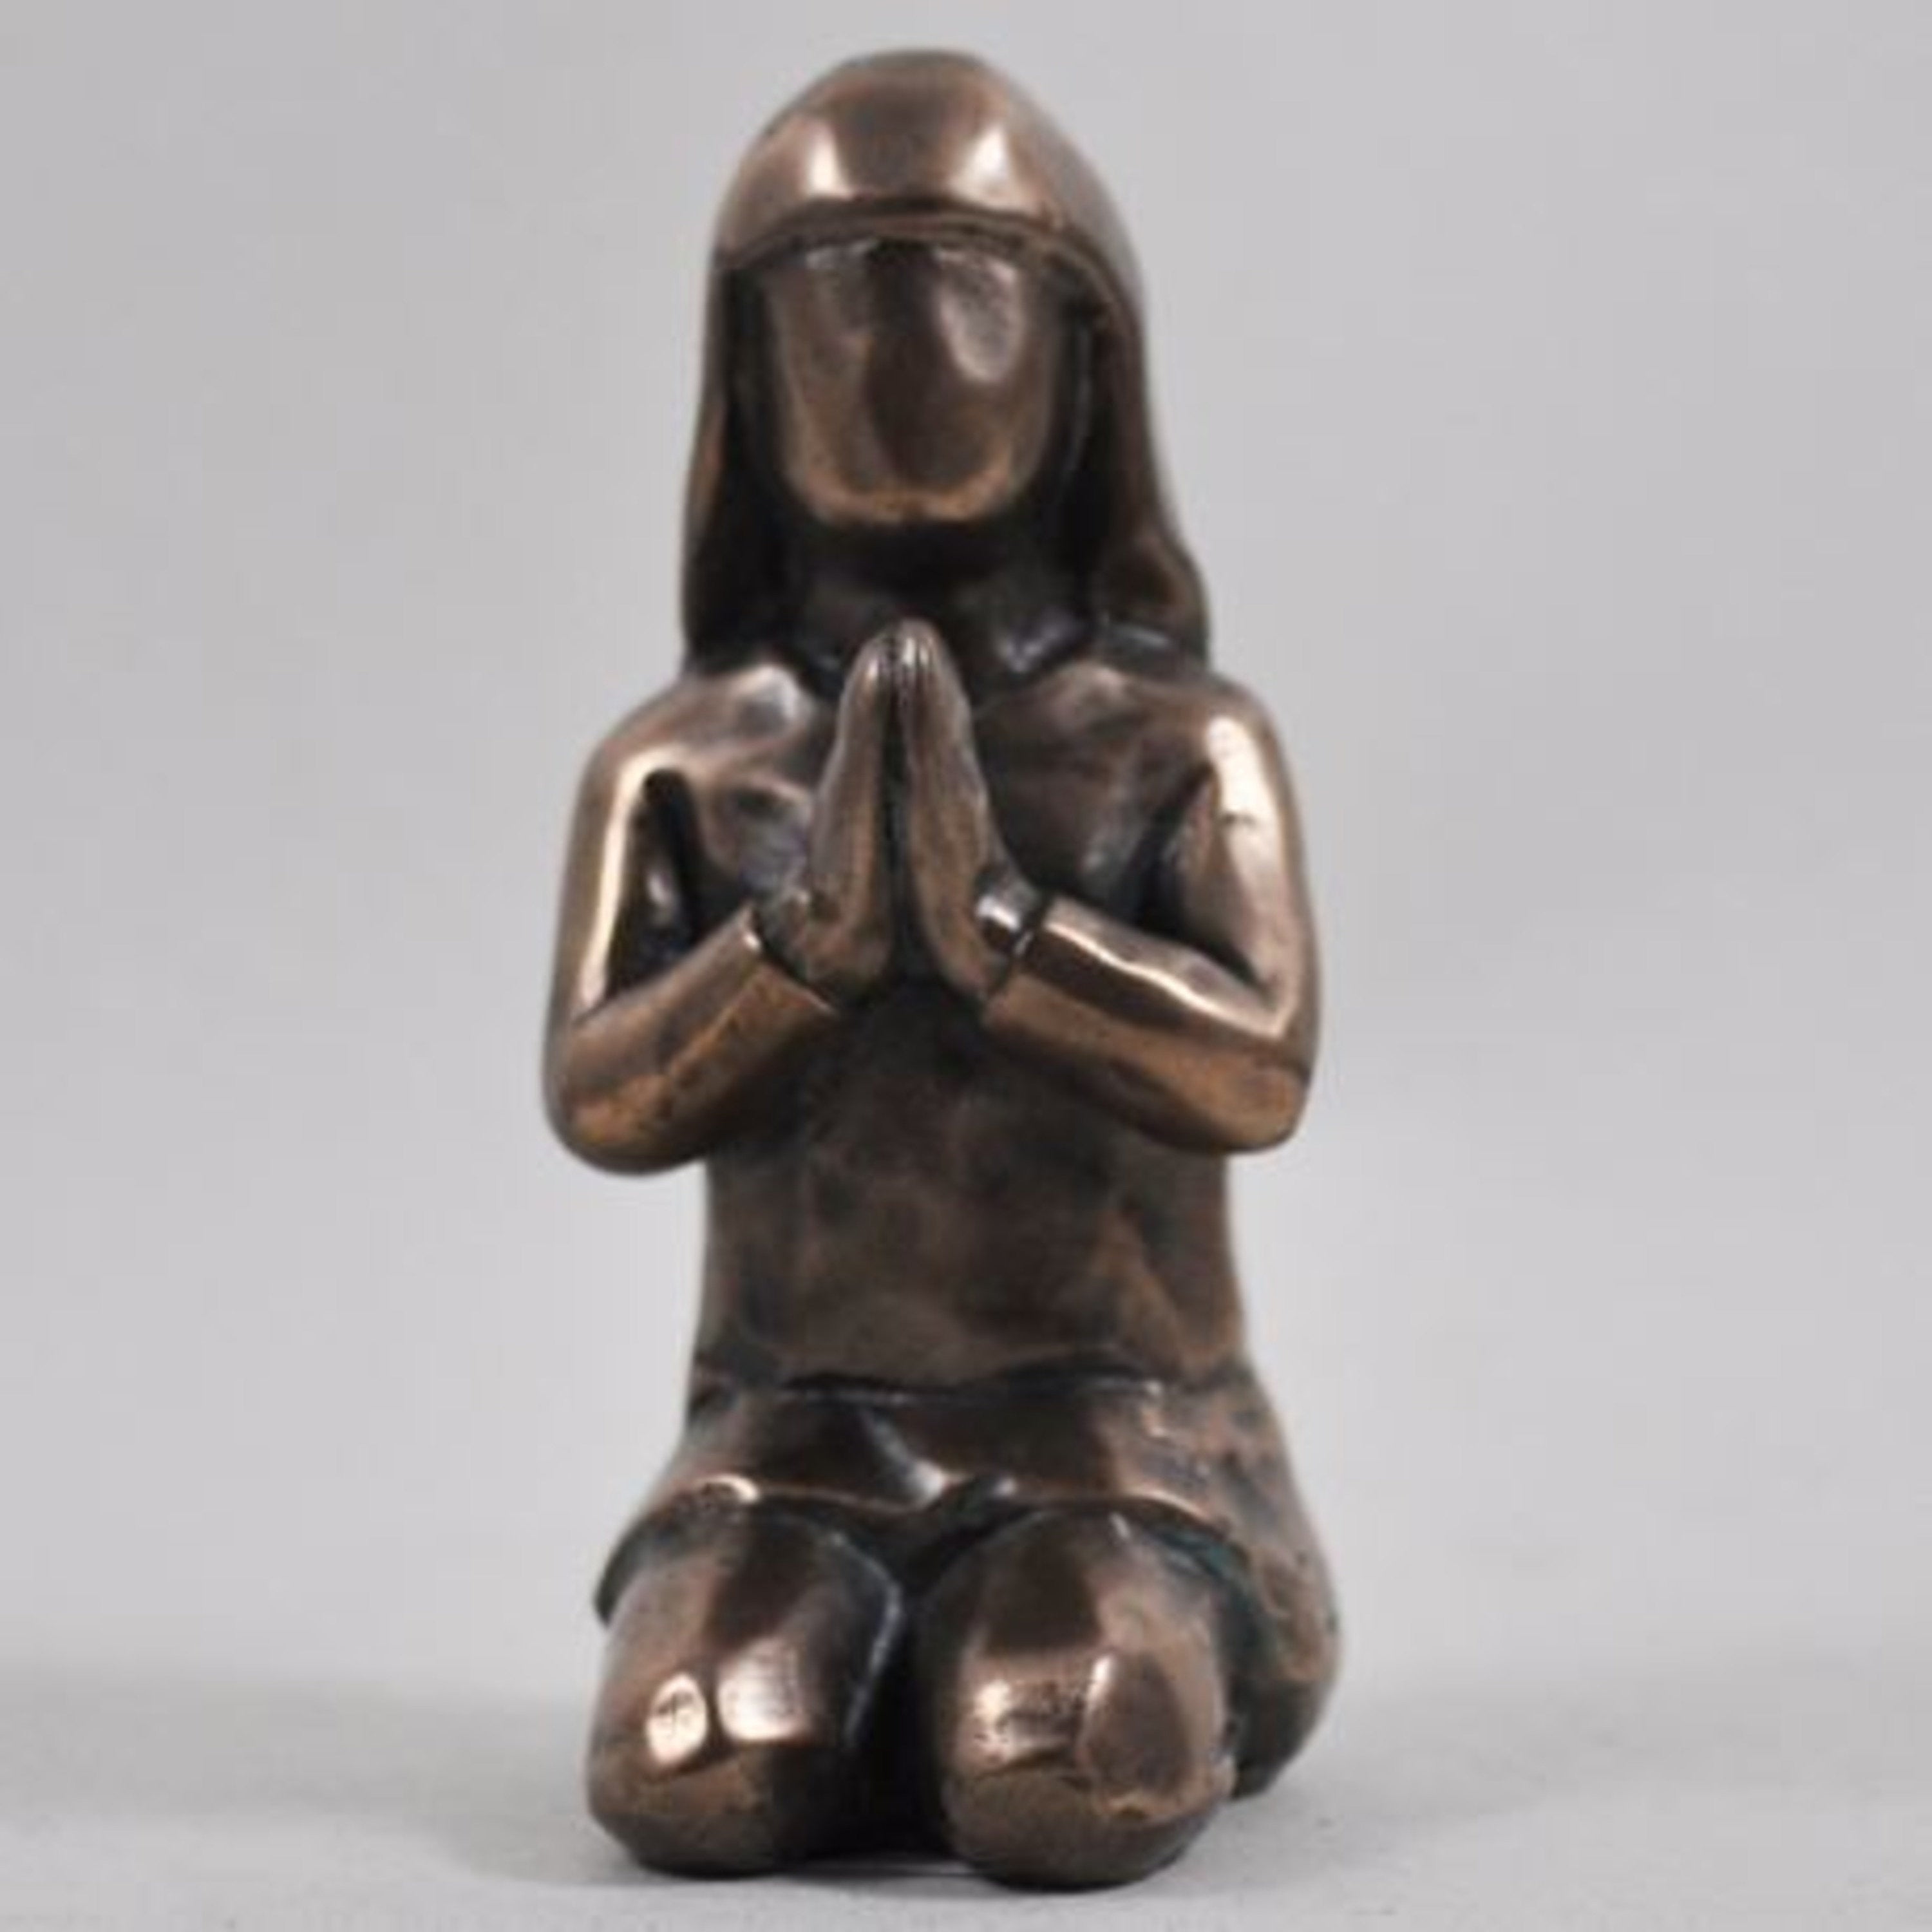 Praying Girl Small Cold Cast Bronze Sculpture